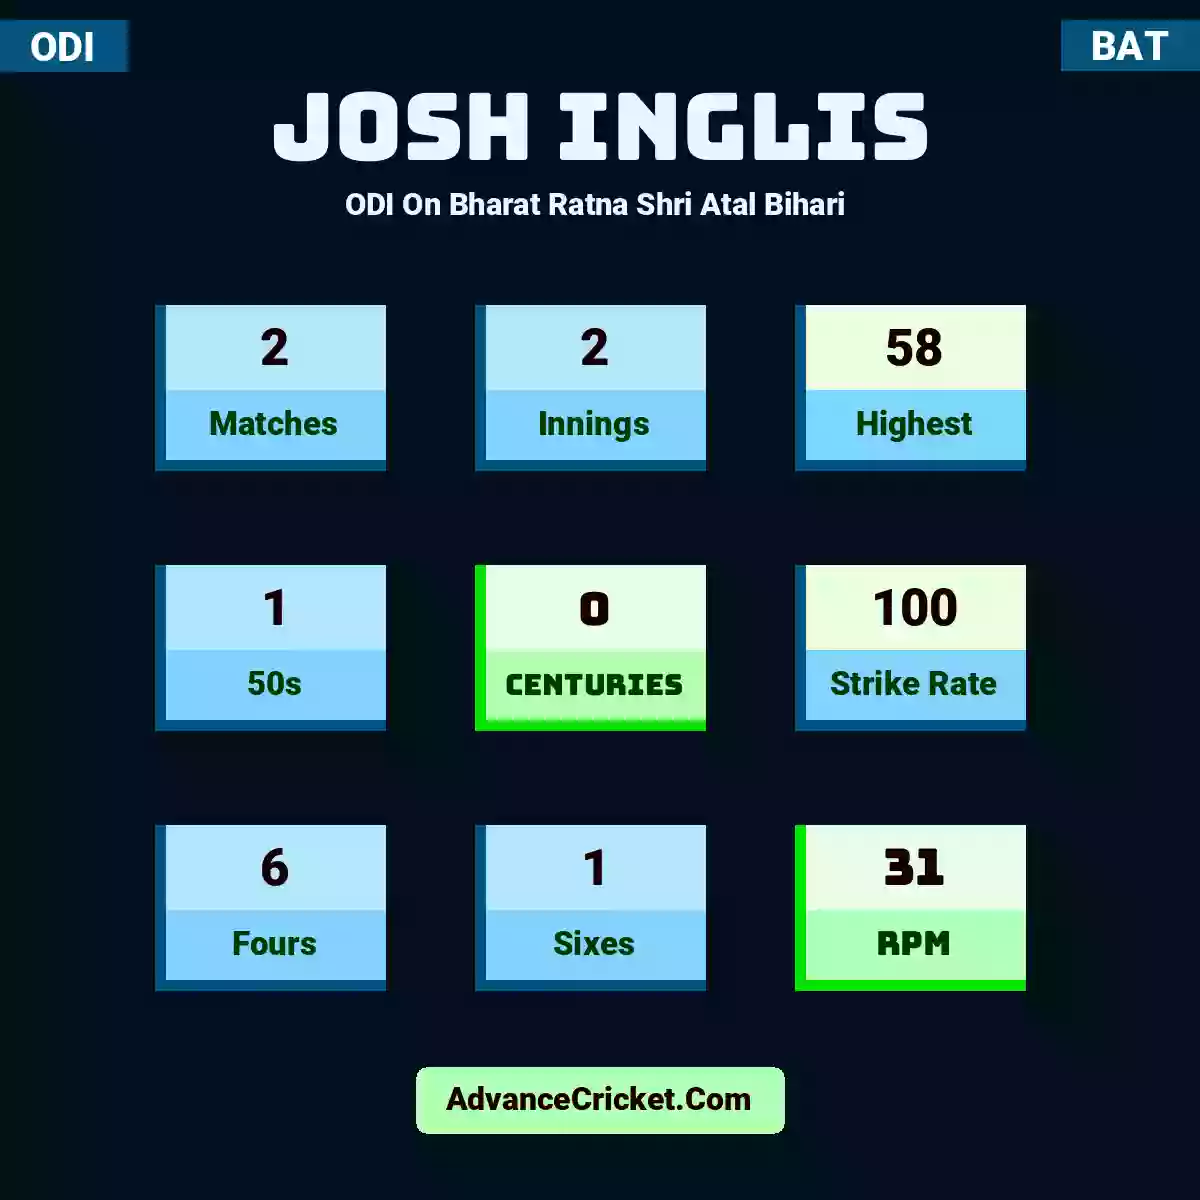 Josh Inglis ODI  On Bharat Ratna Shri Atal Bihari , Josh Inglis played 2 matches, scored 58 runs as highest, 1 half-centuries, and 0 centuries, with a strike rate of 100. J.Inglis hit 6 fours and 1 sixes, with an RPM of 31.